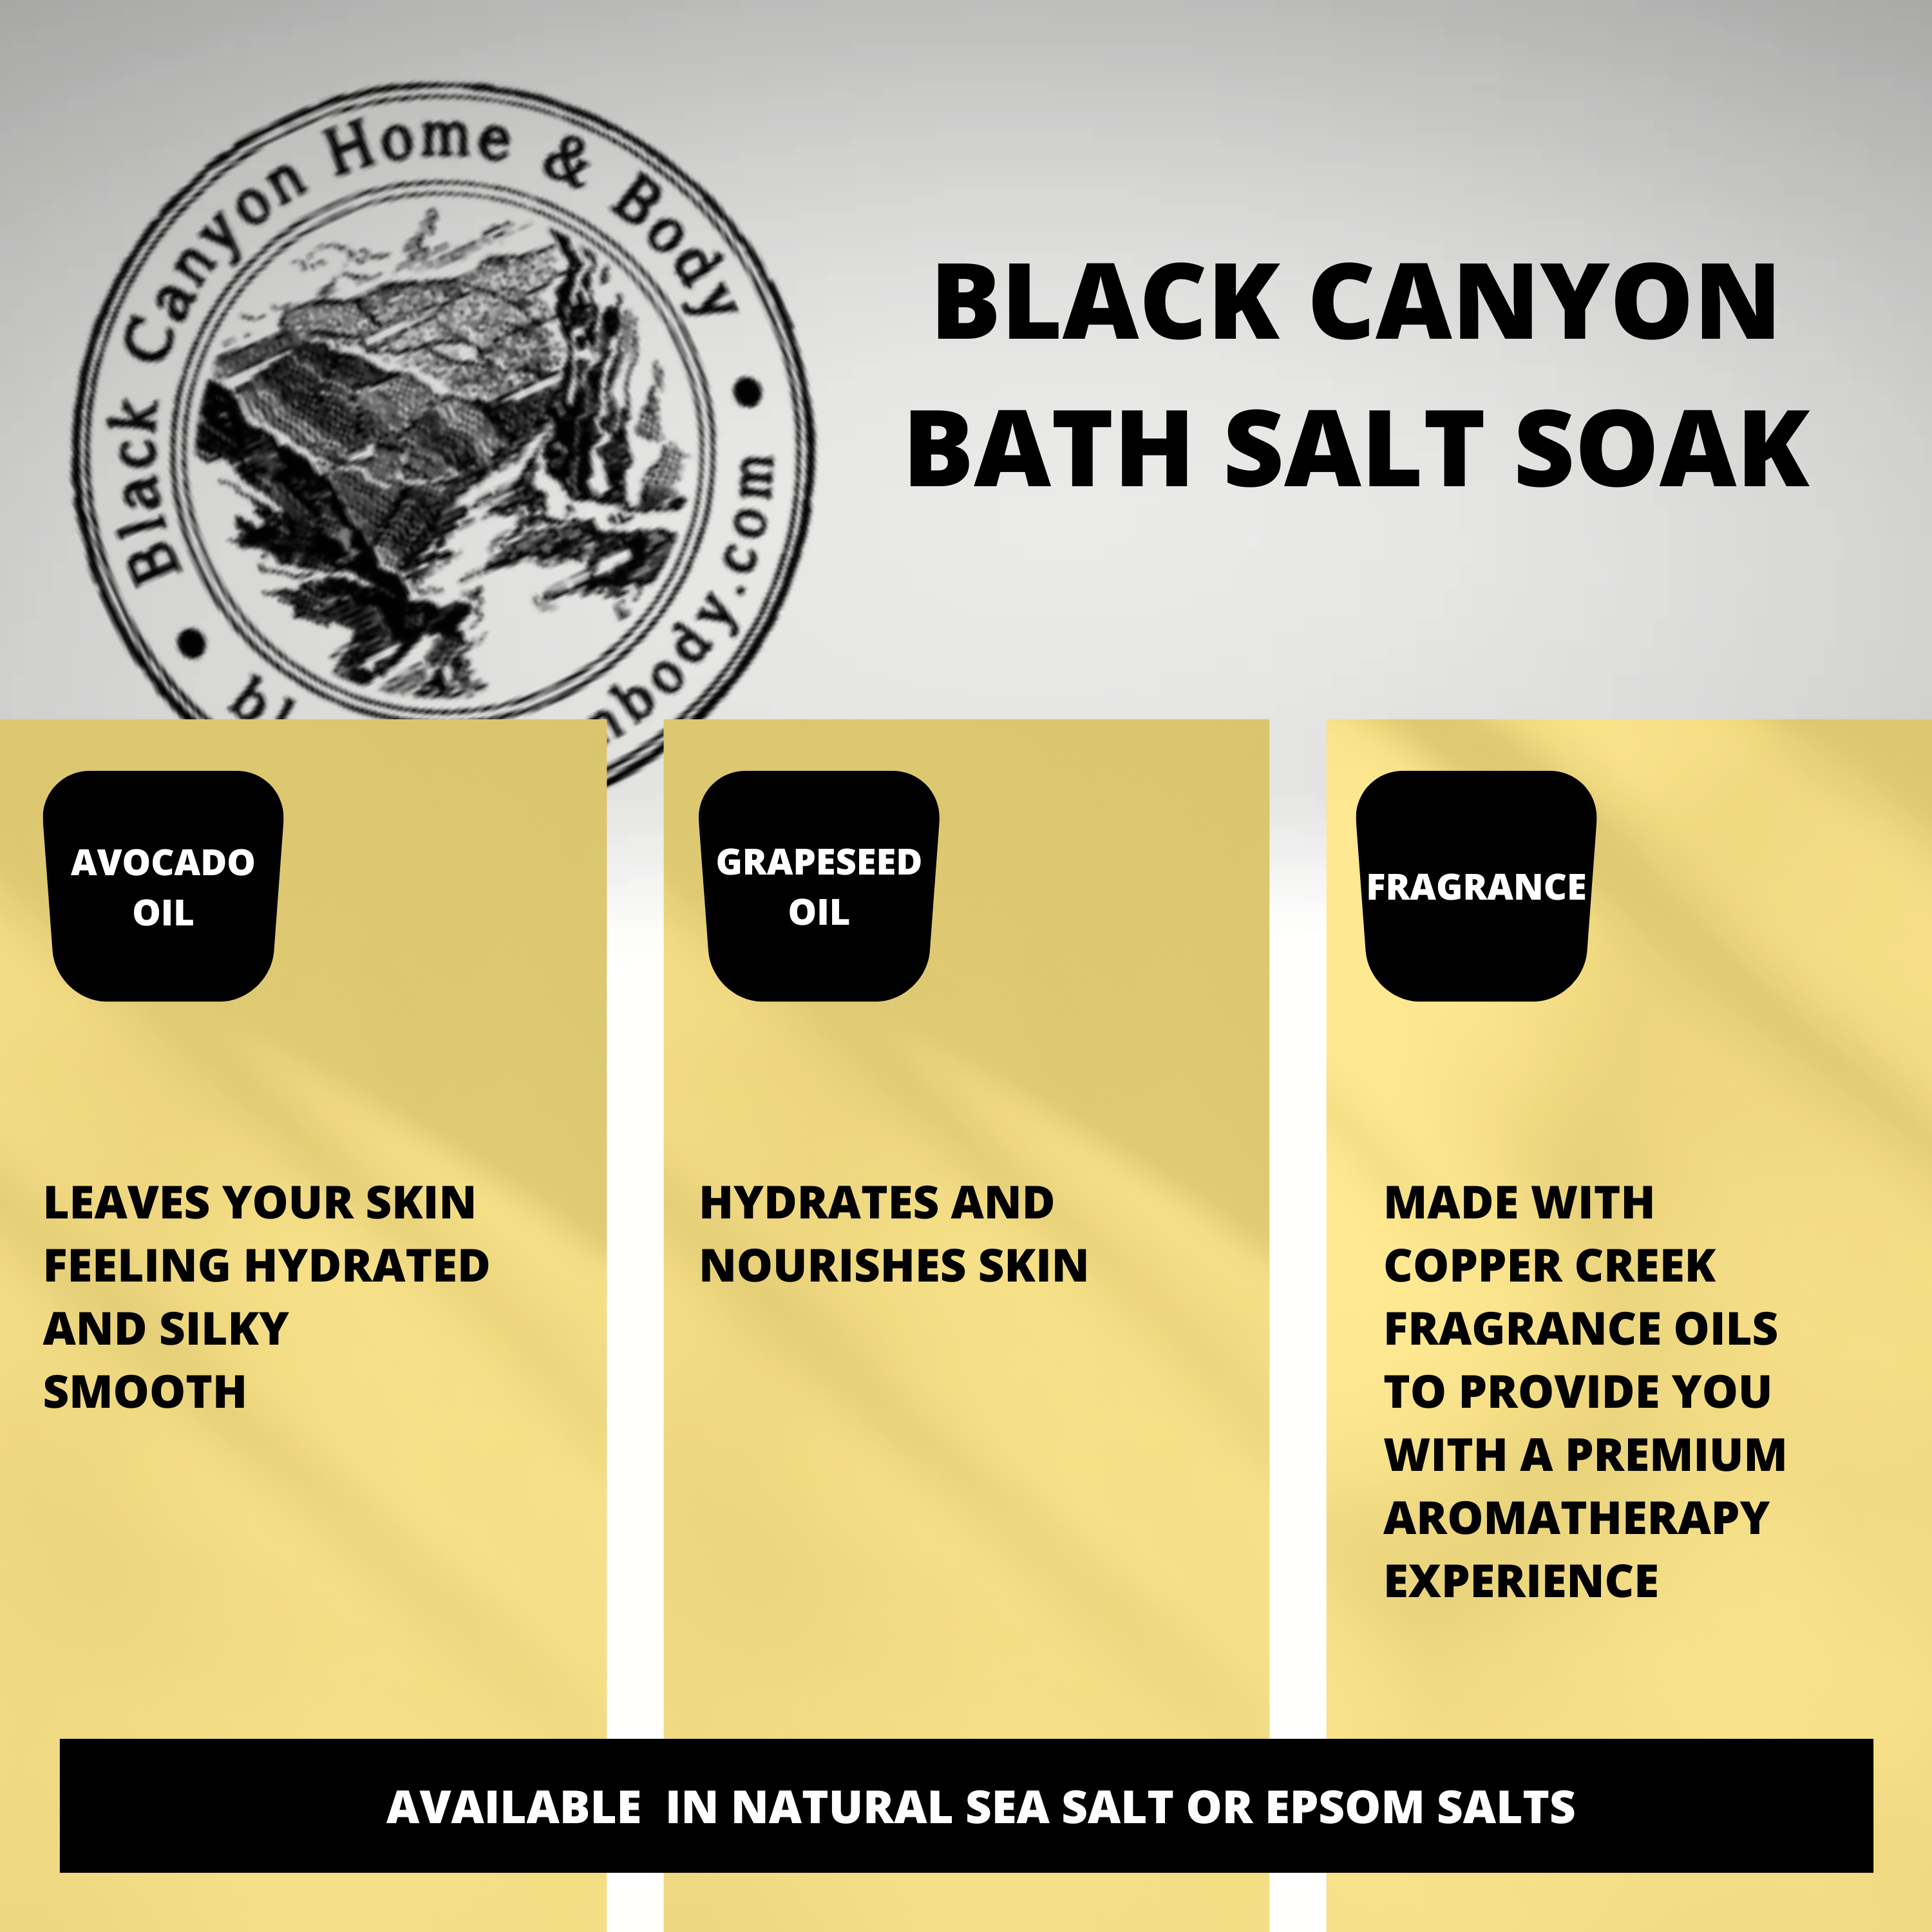 Black Canyon Black Currant & Jasmine Scented Sea Salt Bath Soak